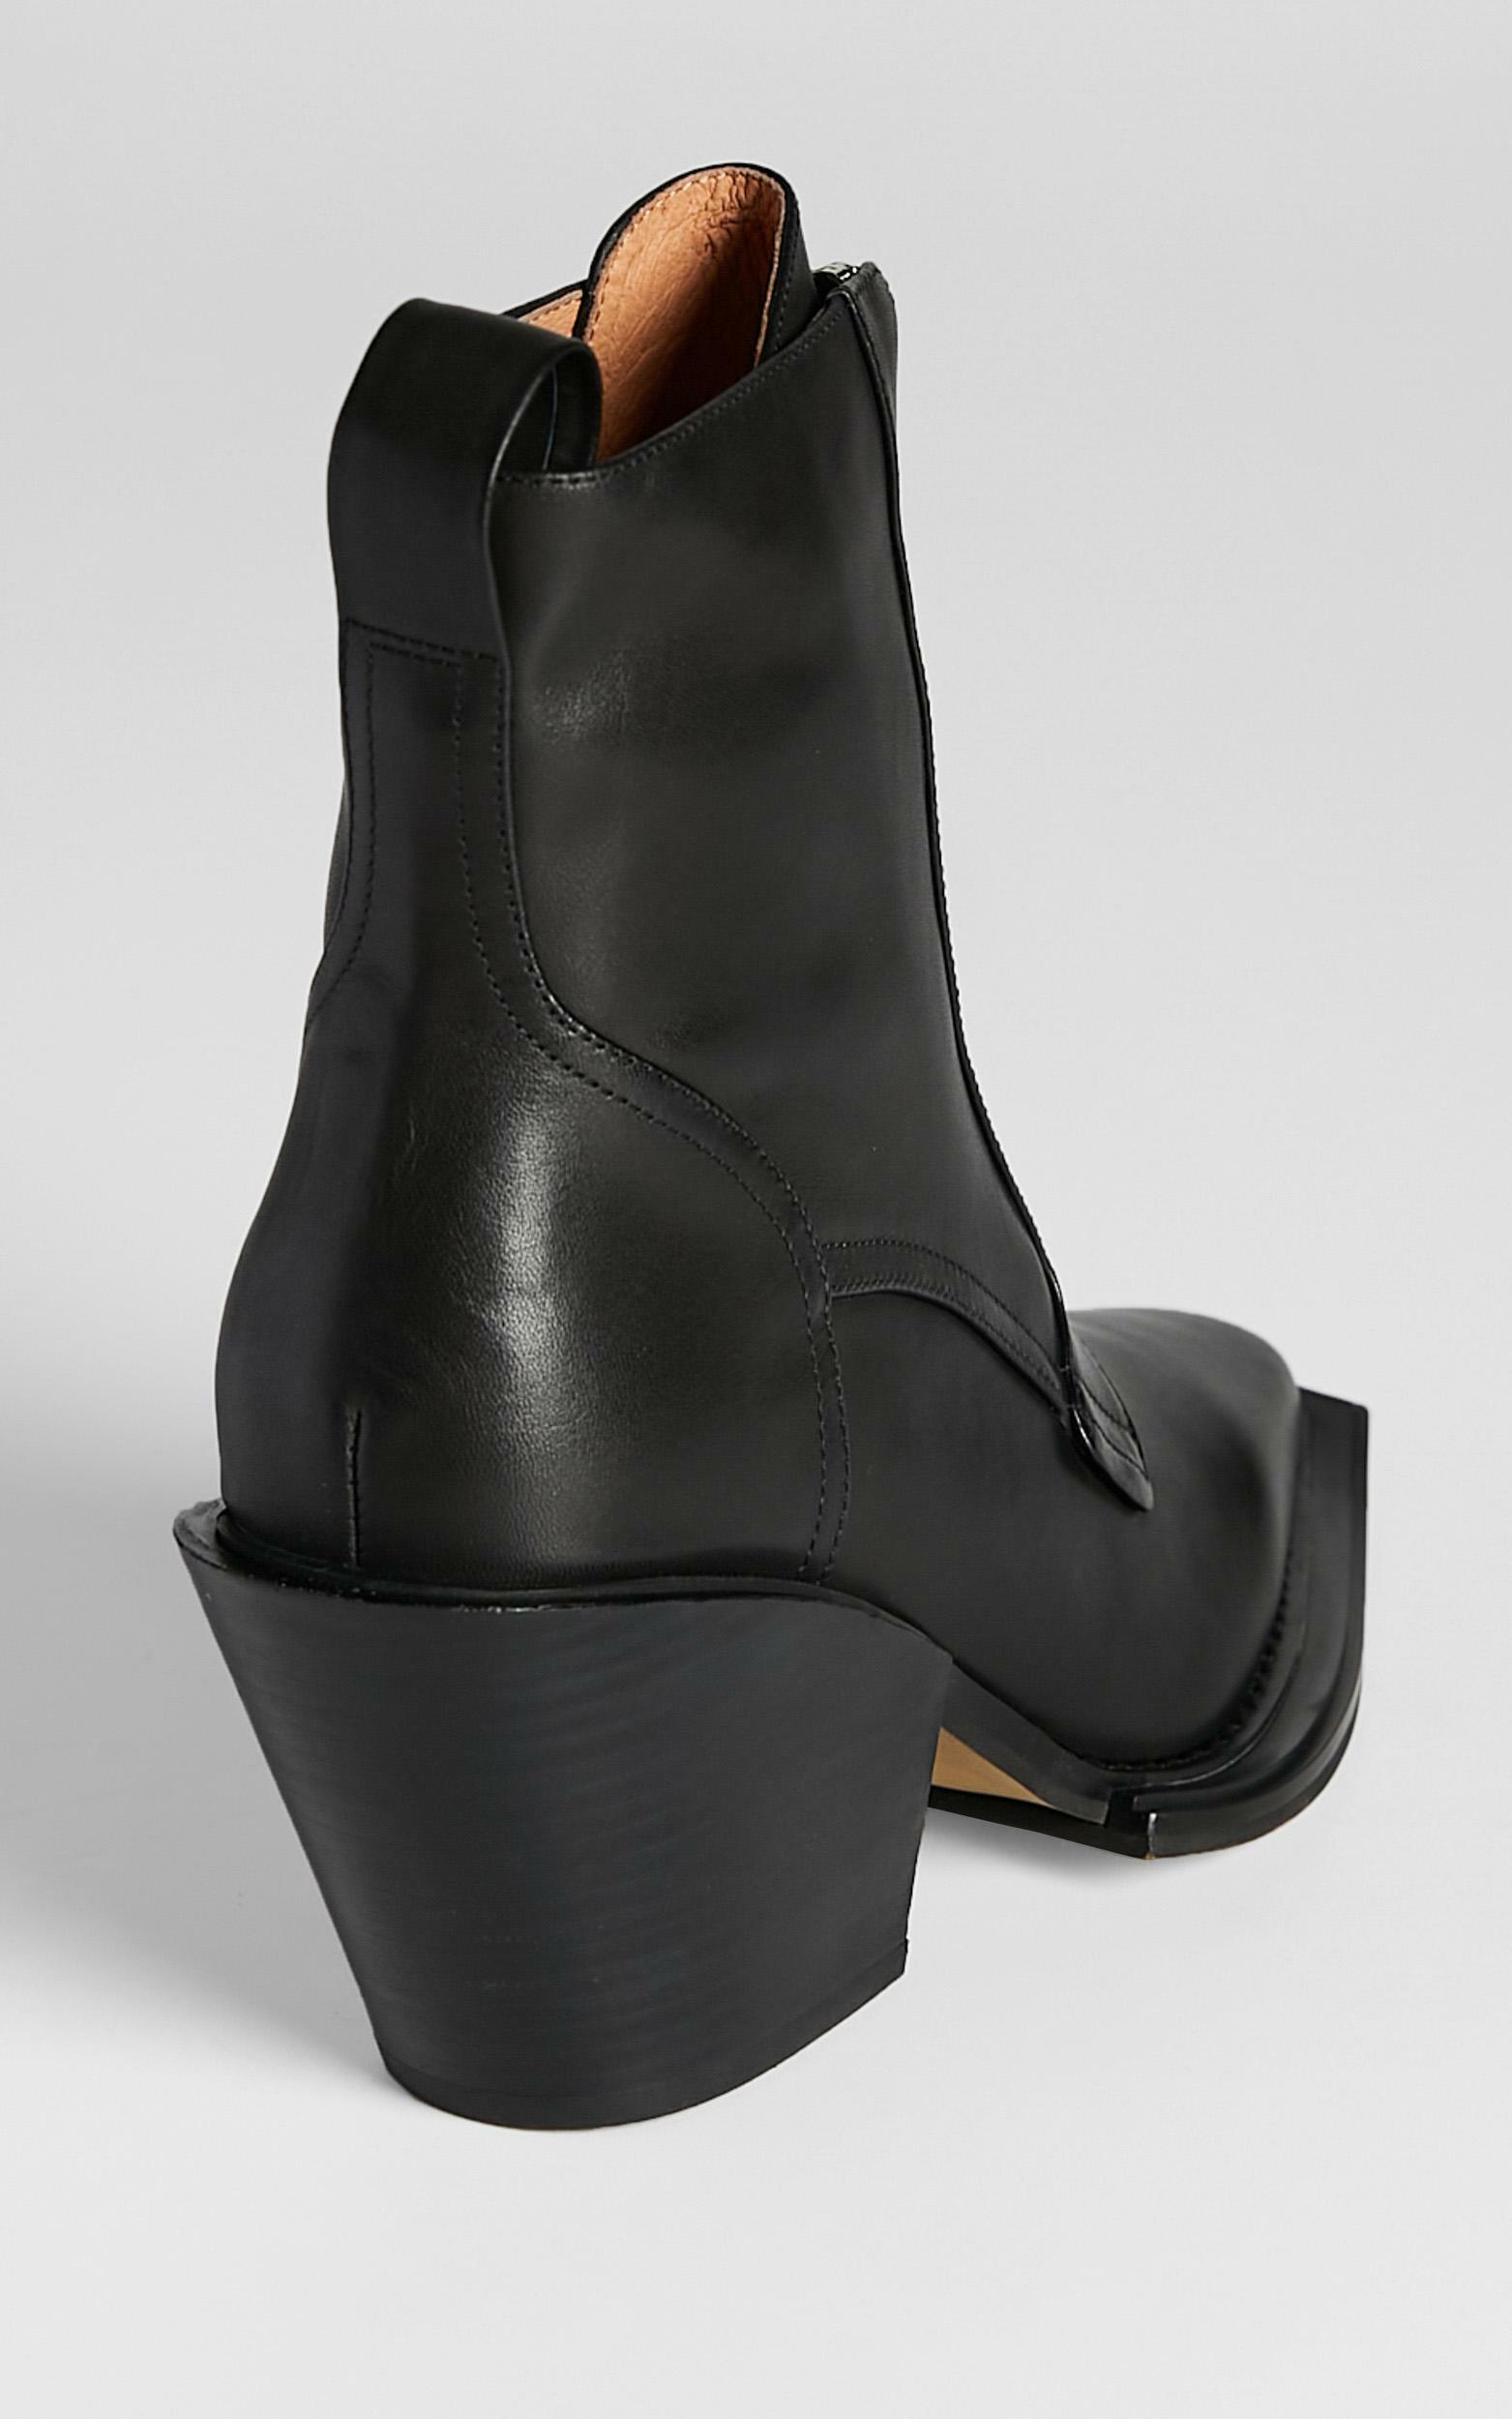 Alias Mae - Jordan Boots in Black 